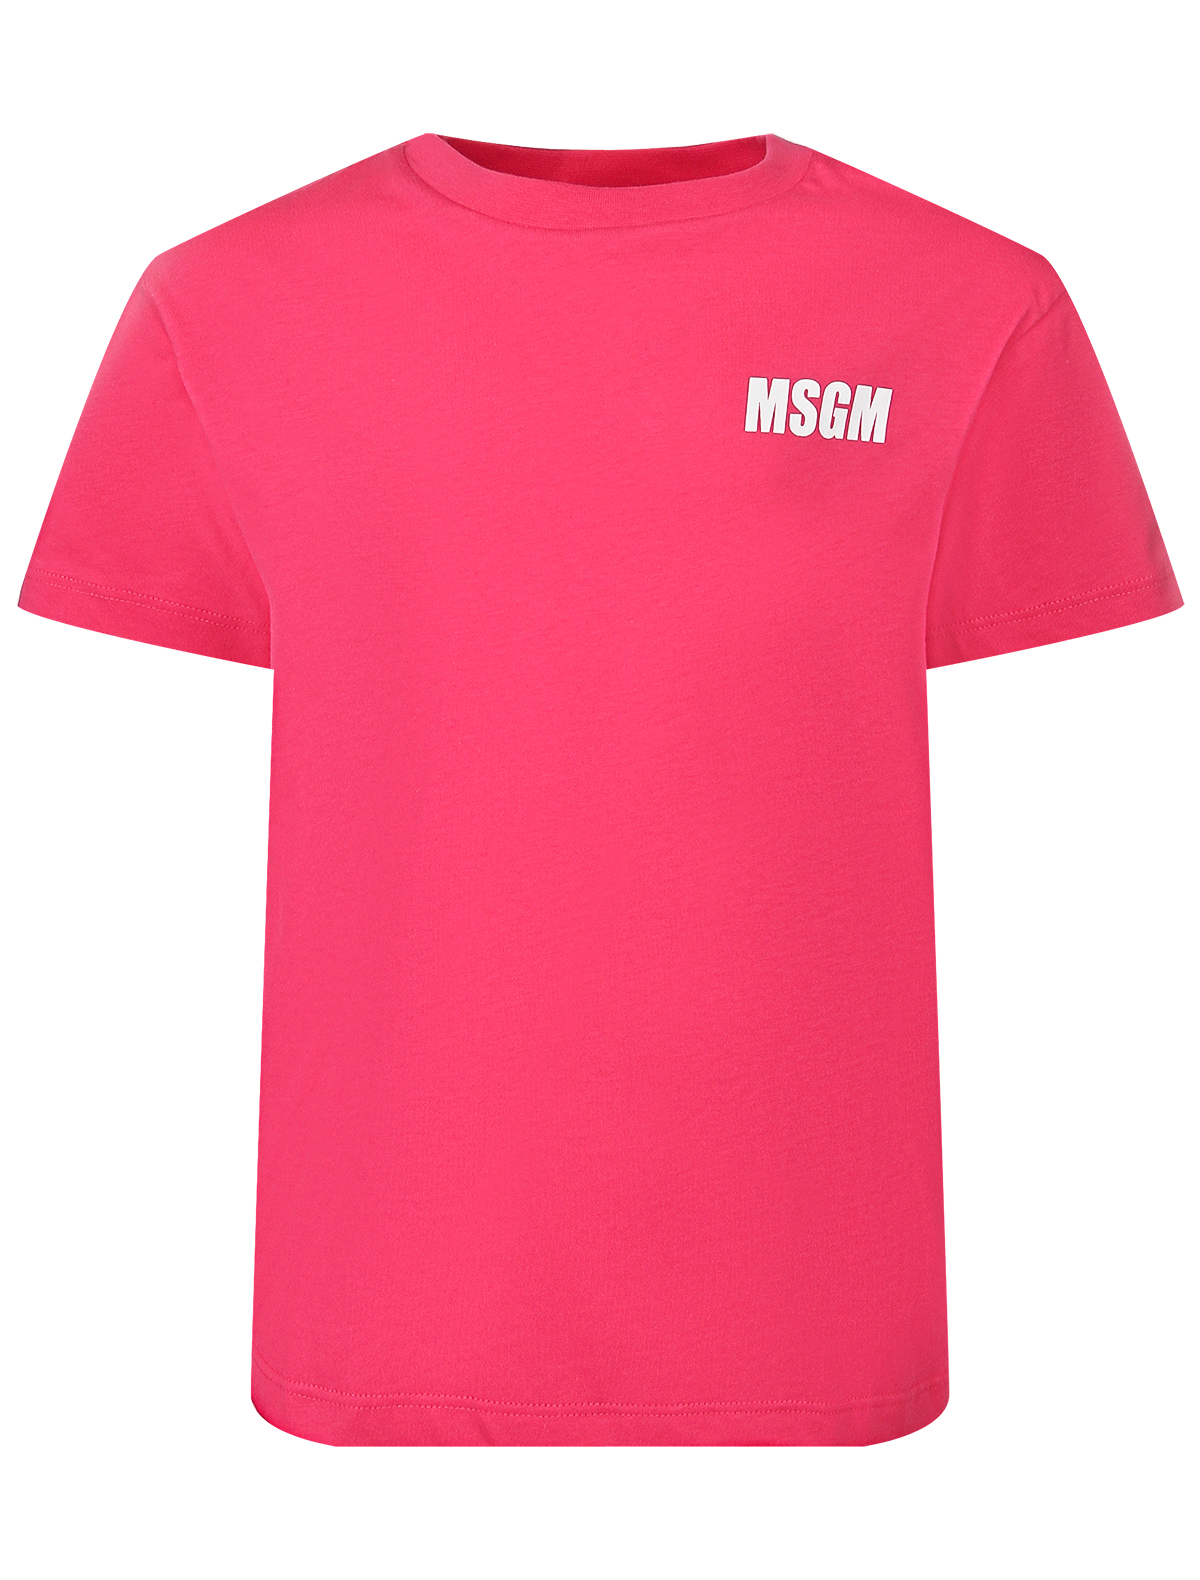 Футболка MSGM 2648562, цвет розовый, размер 9 1134509413203 - фото 1